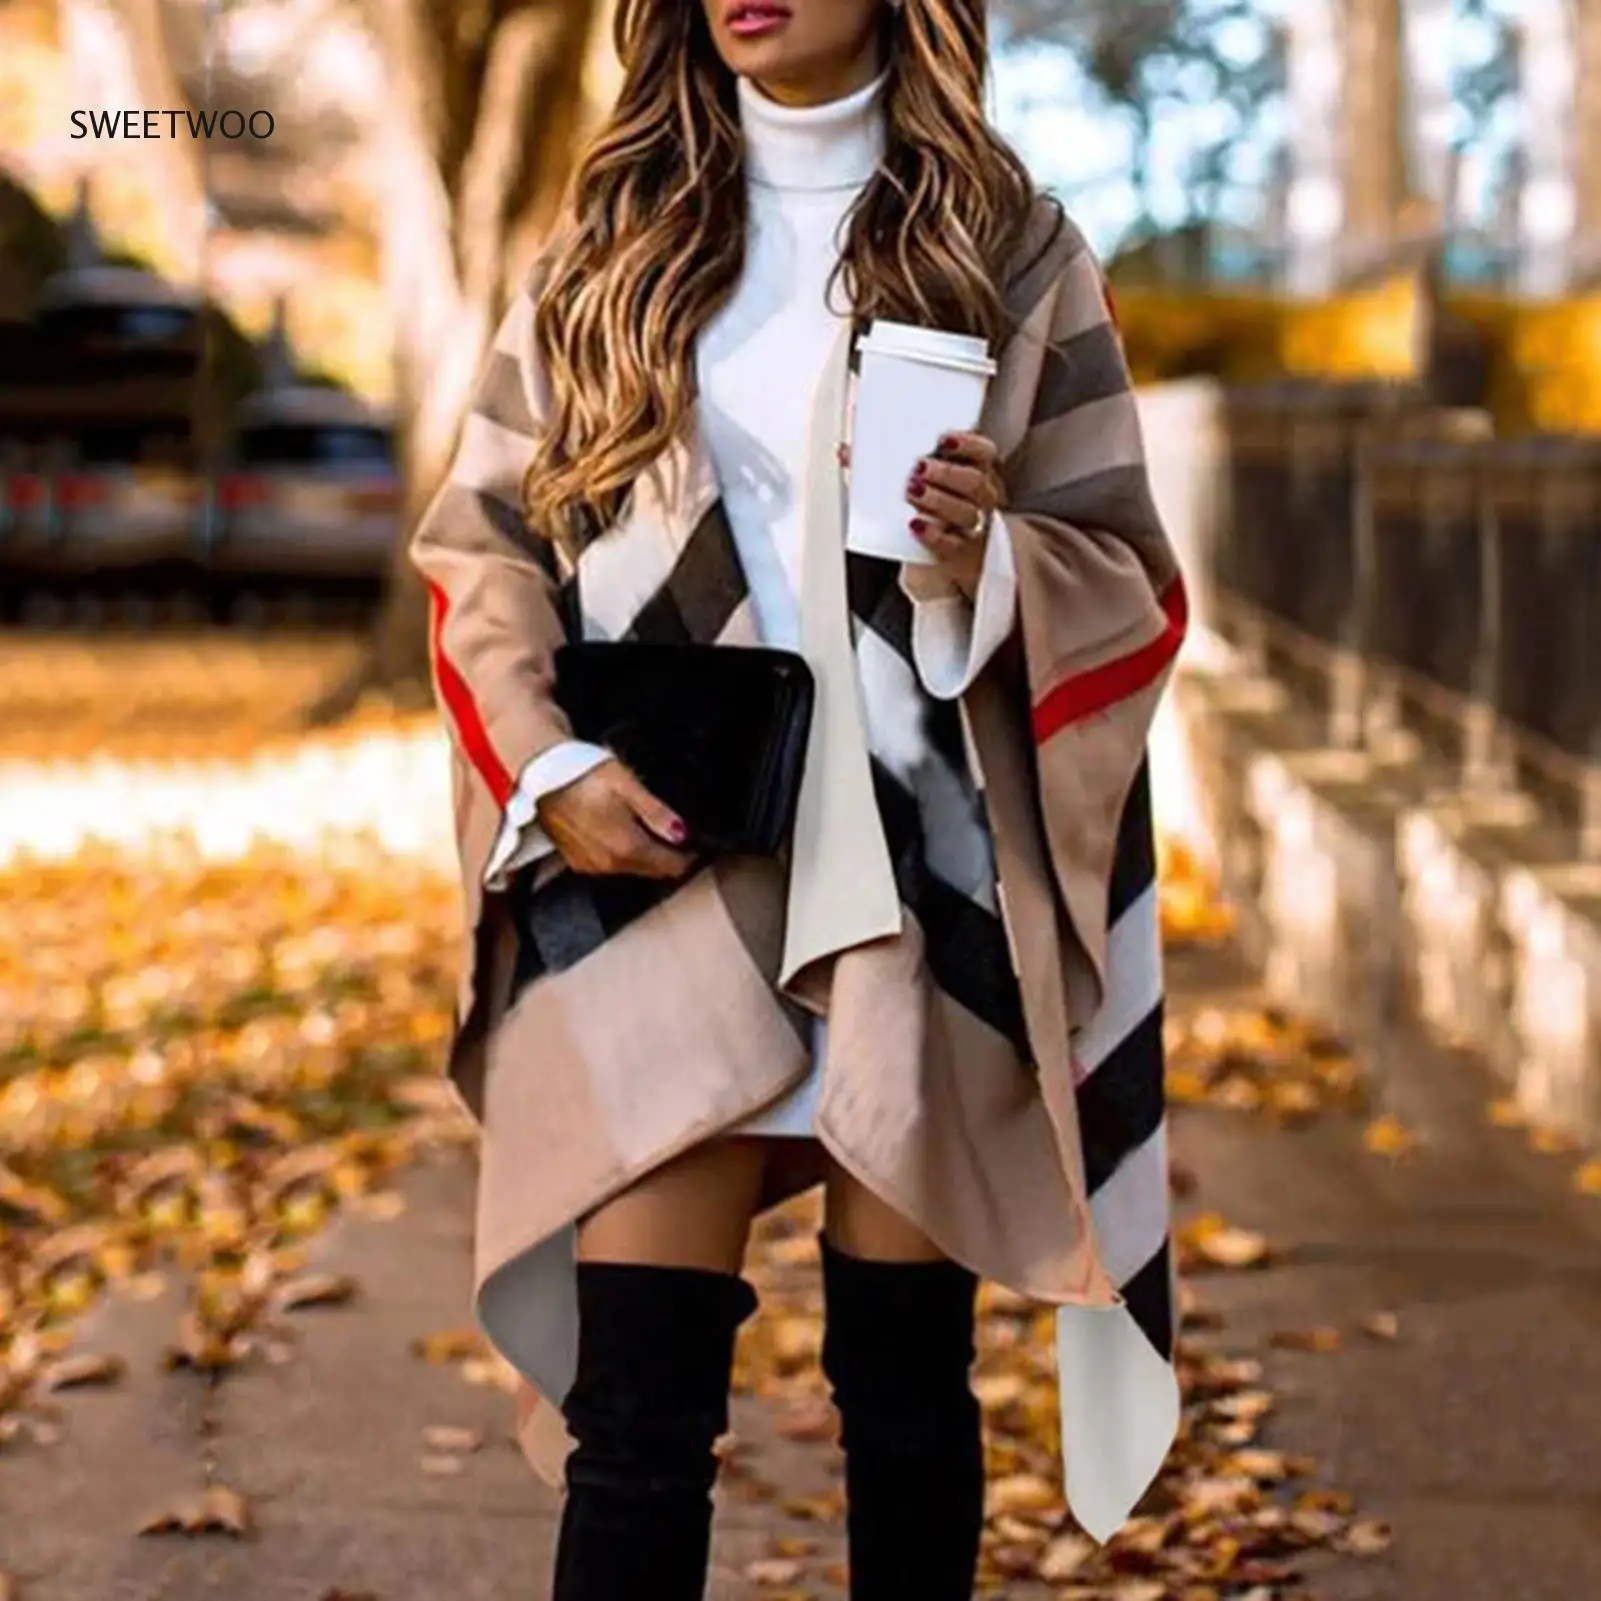 

Autumn Winter Women Fashion Loose Batwing Sleeve Coat Plaid Stripes Poncho Scarf Shawl Outwear